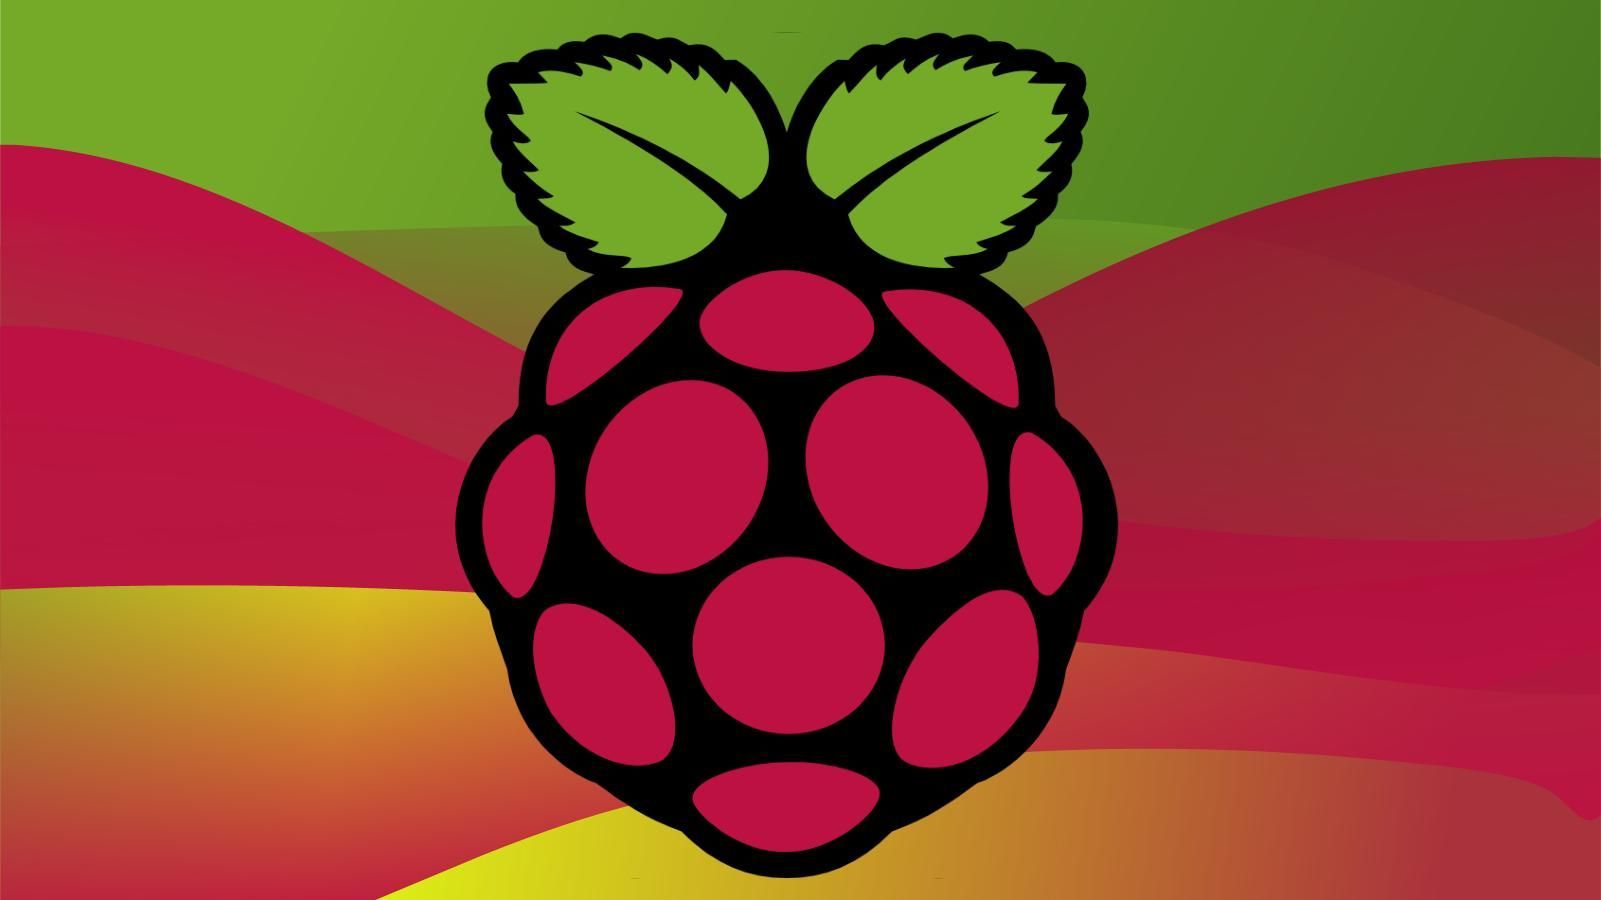 Raspberry Pi Wallpaper Pack - Download - CHIP